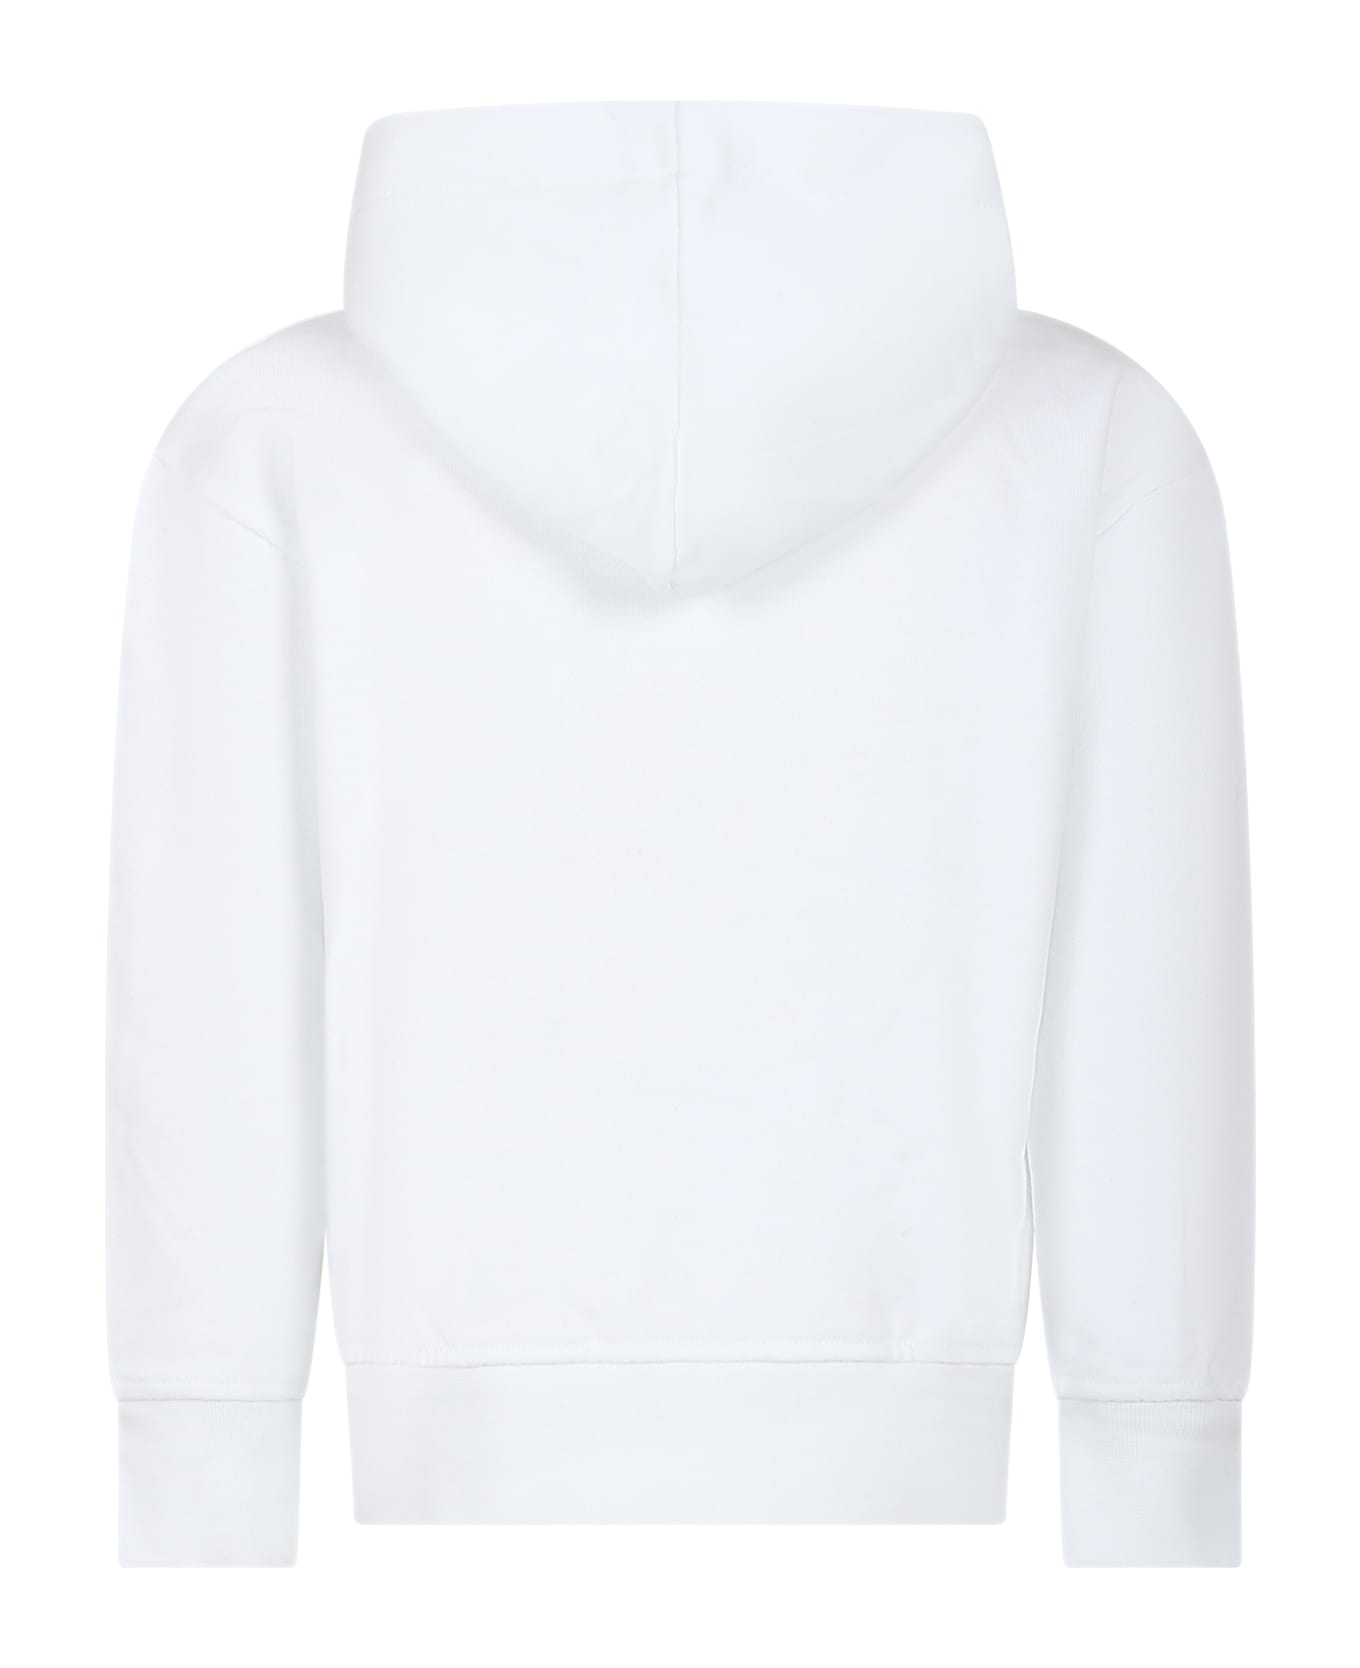 MSGM White Sweatshirt For Kids With Logo - White